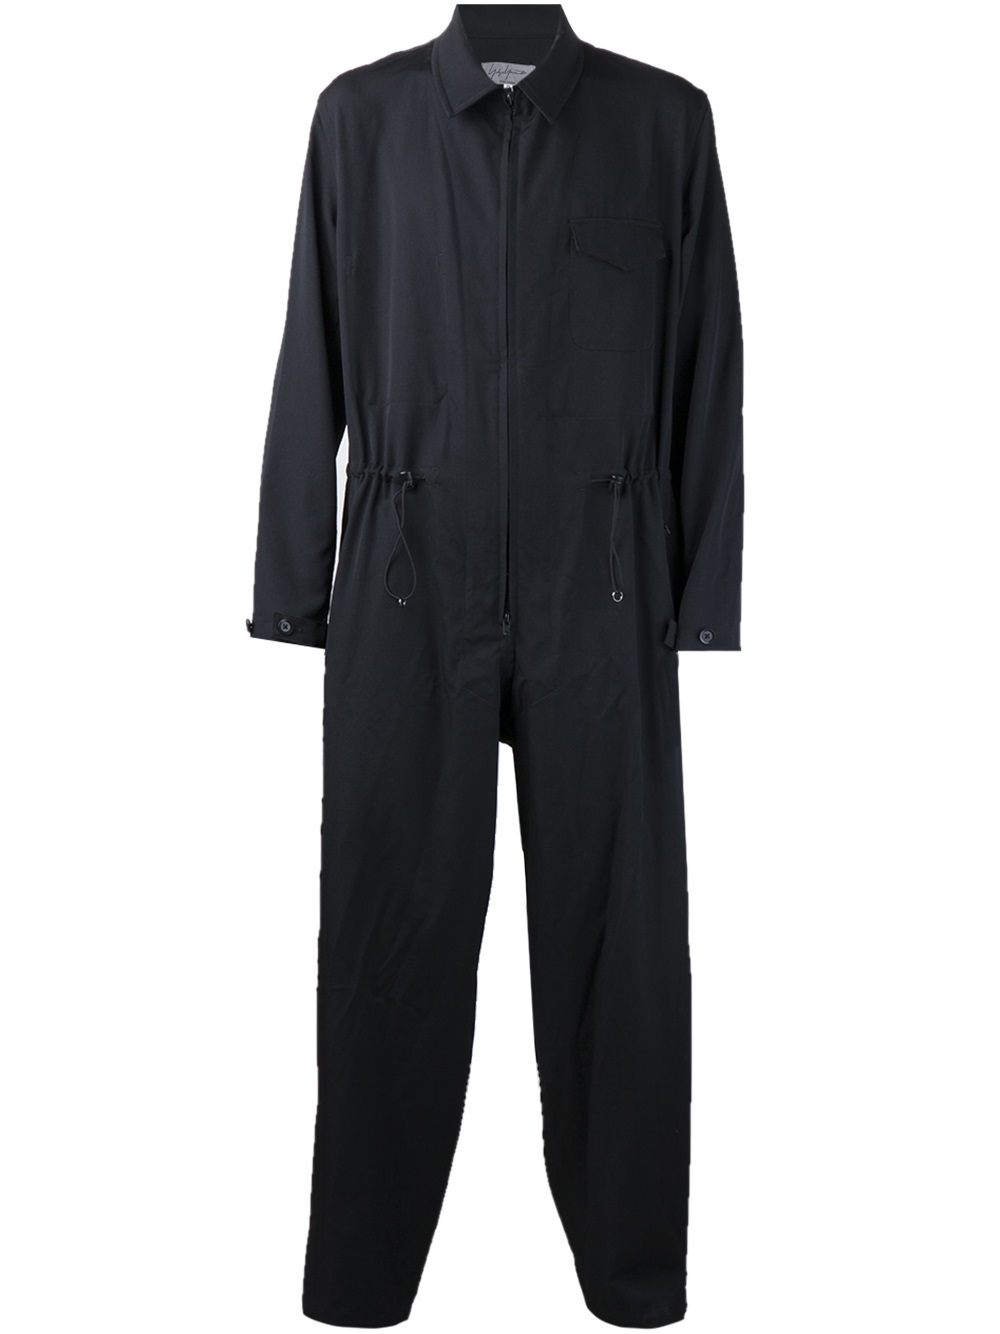 Lyst - Yohji Yamamoto Drawstring Waist Jumpsuit in Black for Men